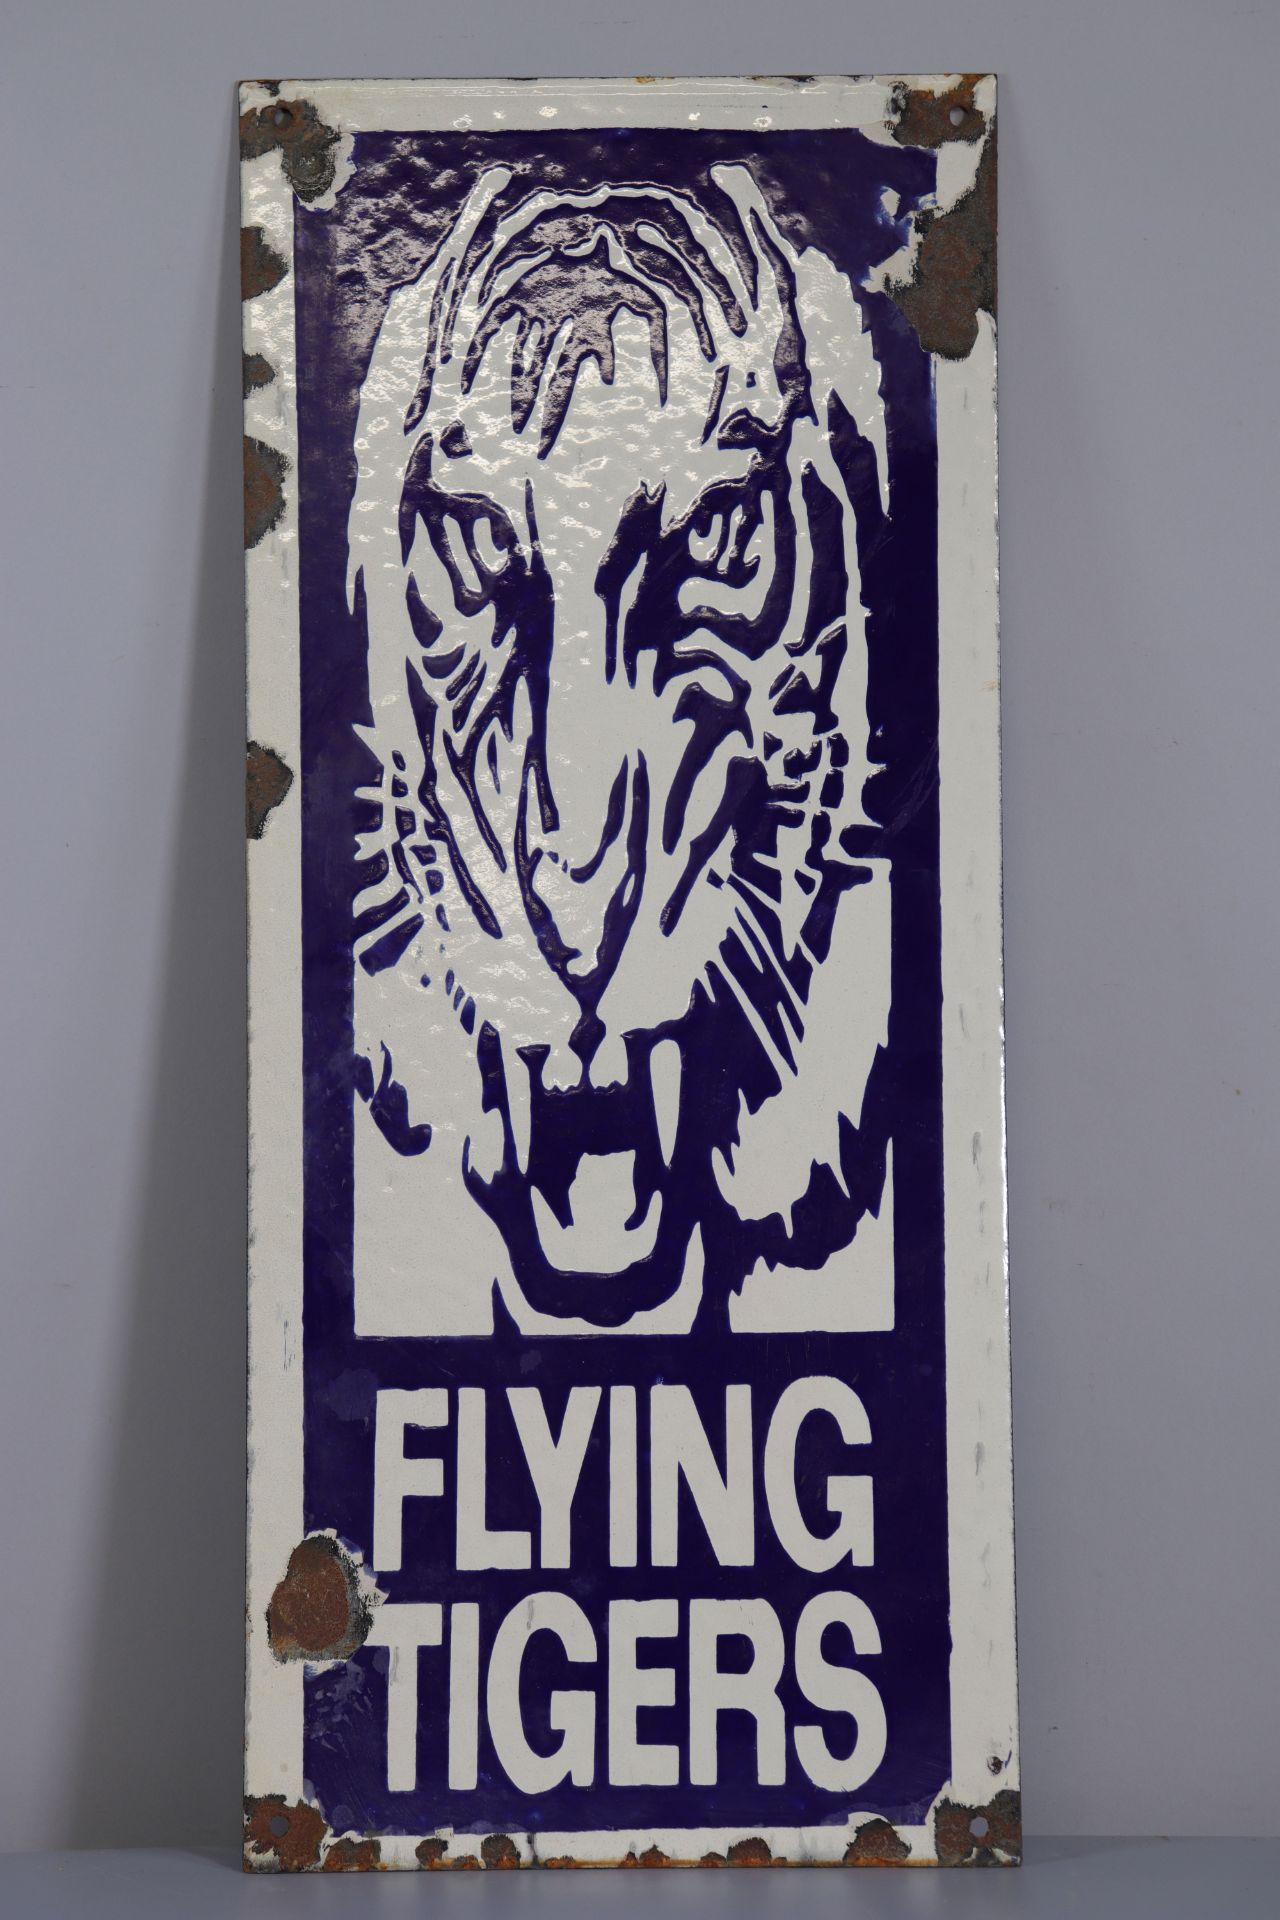 Flying tigers enamel sign